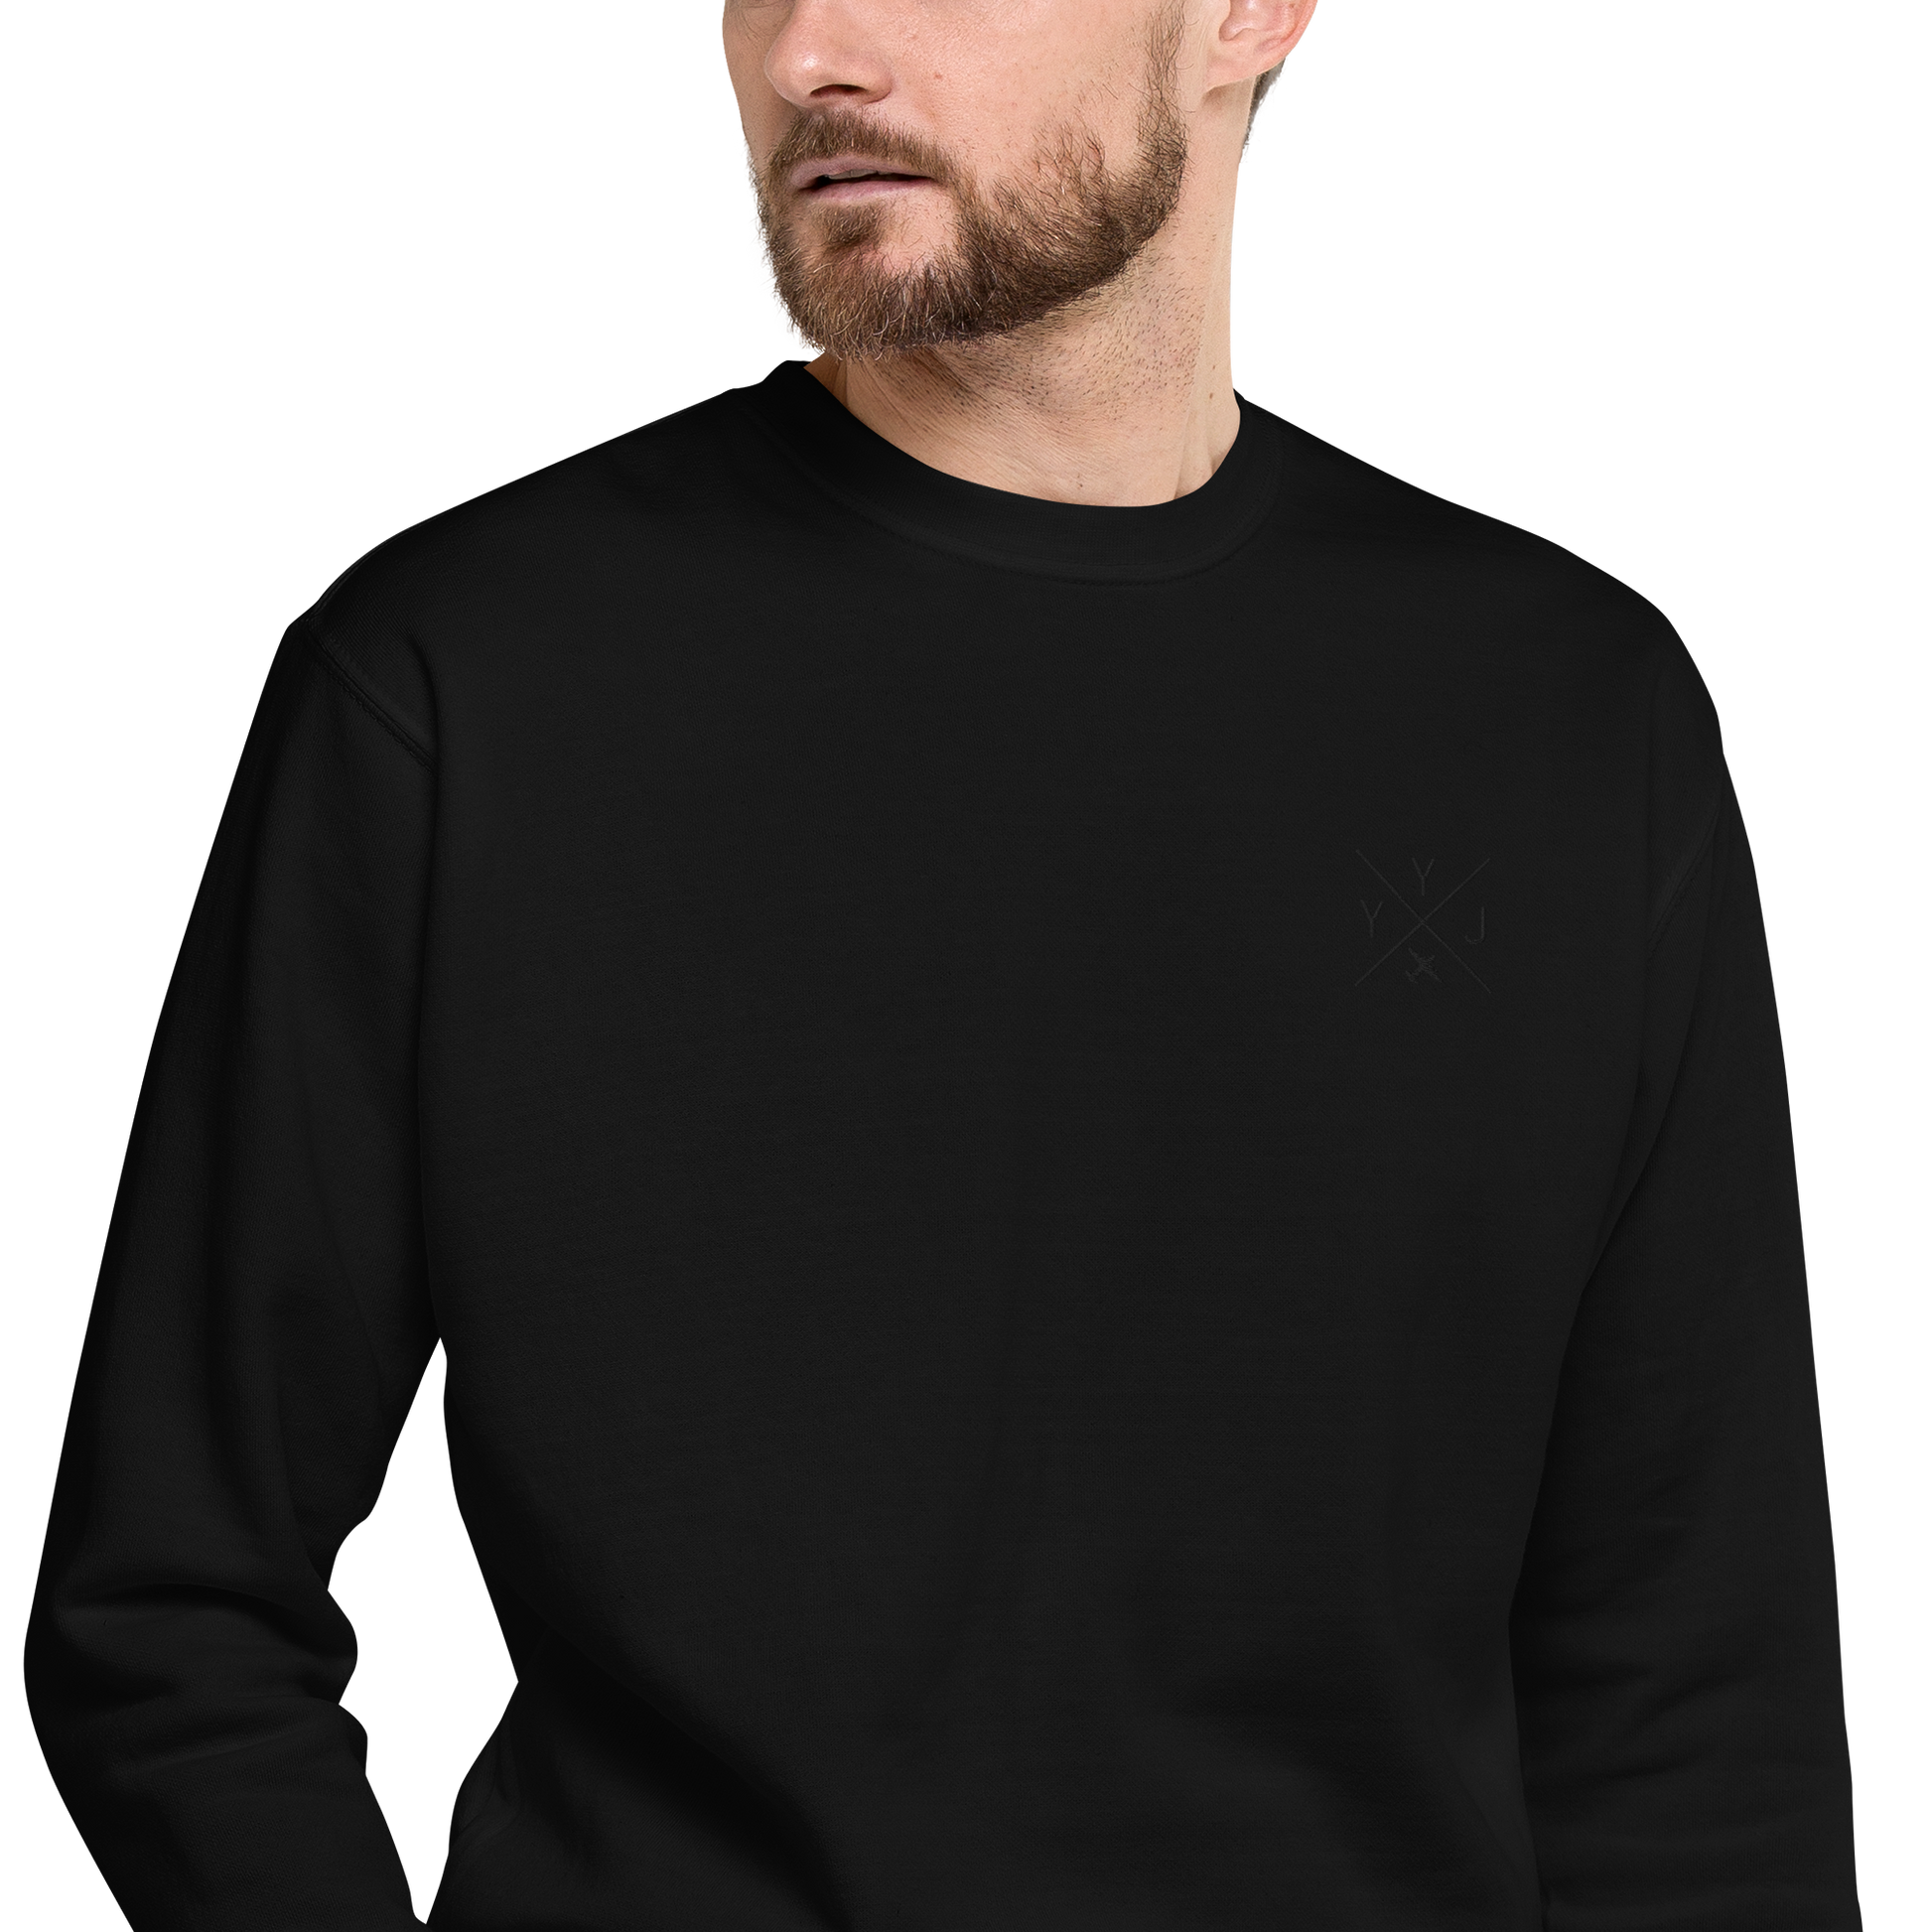 YHM Designs - YYJ Victoria Premium Sweatshirt - Crossed-X Design with Airport Code and Vintage Propliner - Black Embroidery - Image 05